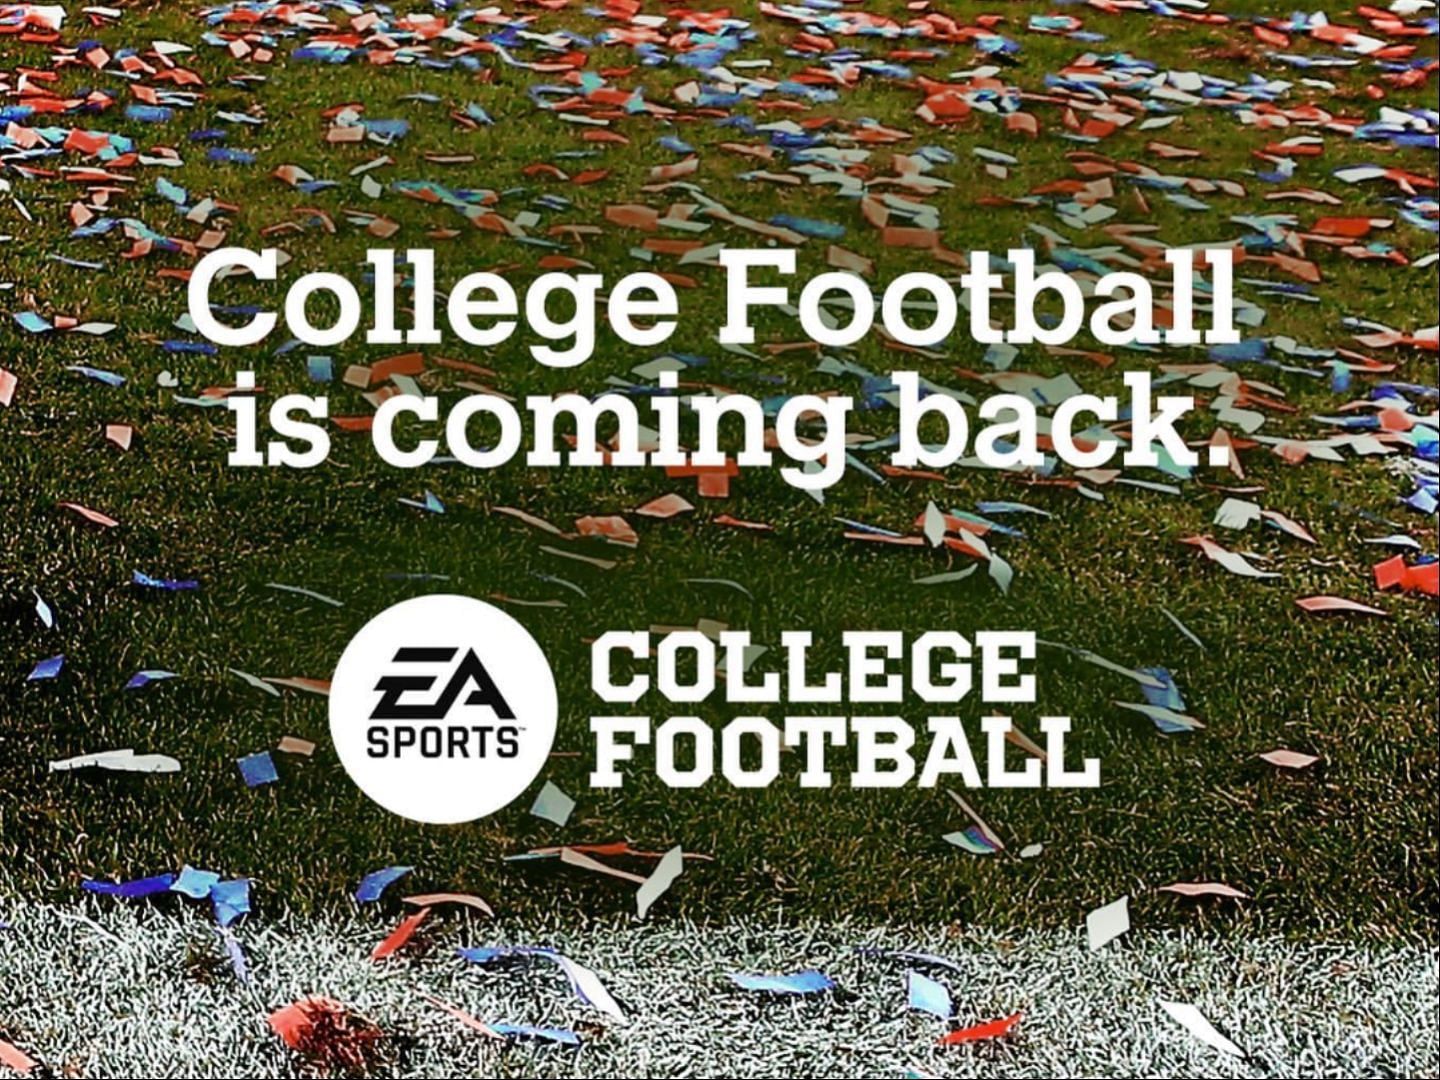 EA College Sports 25 videogame collage